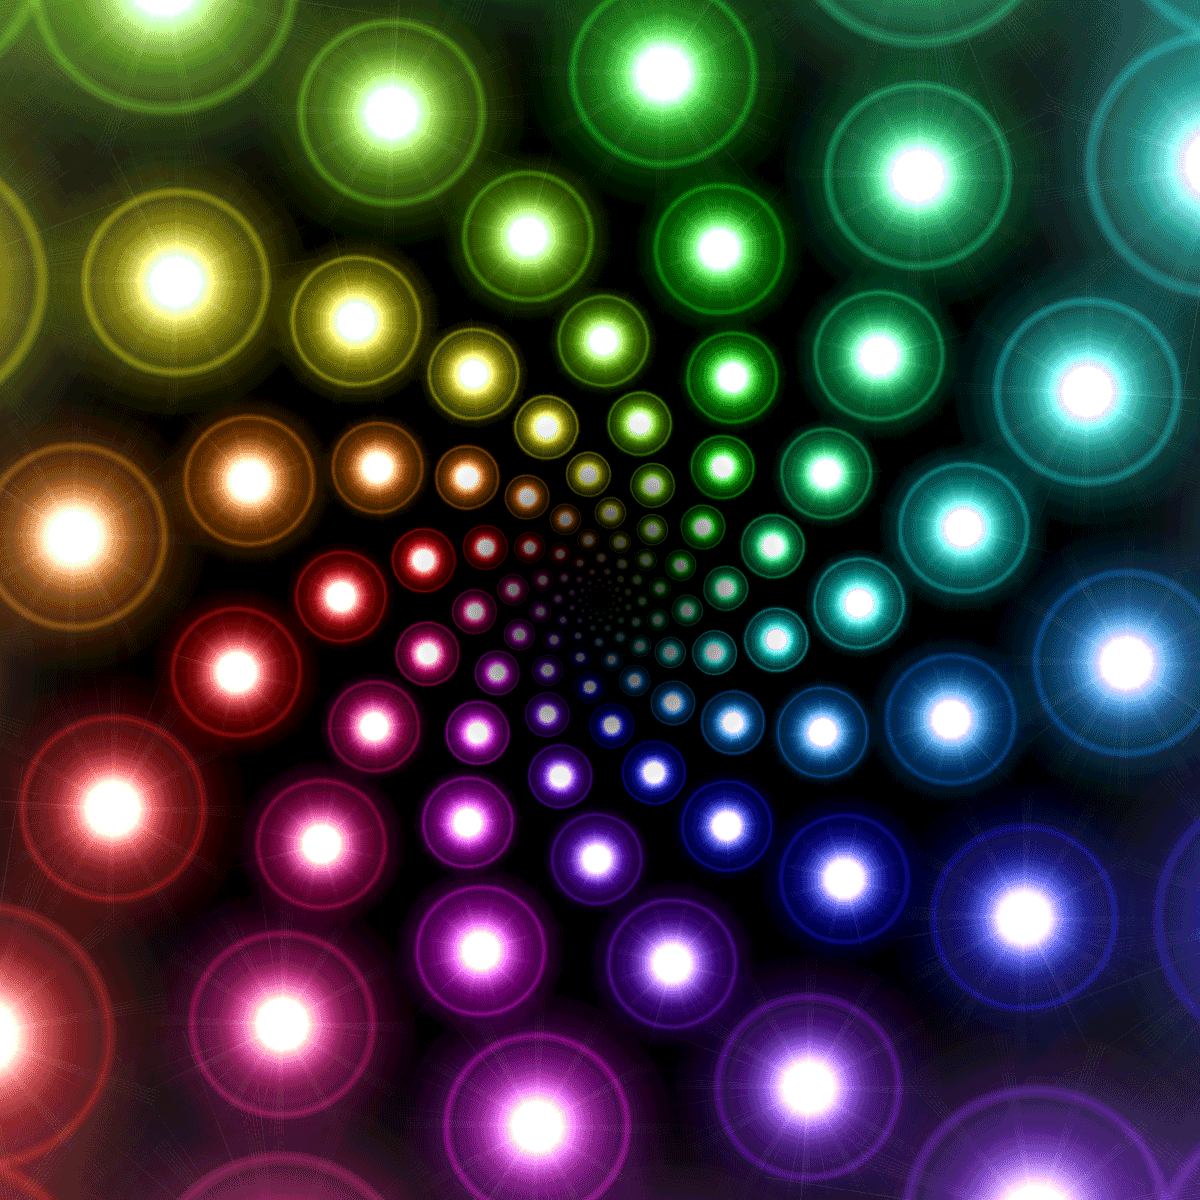 spiral anim 57 by lordsqueak on deviantart fractal art